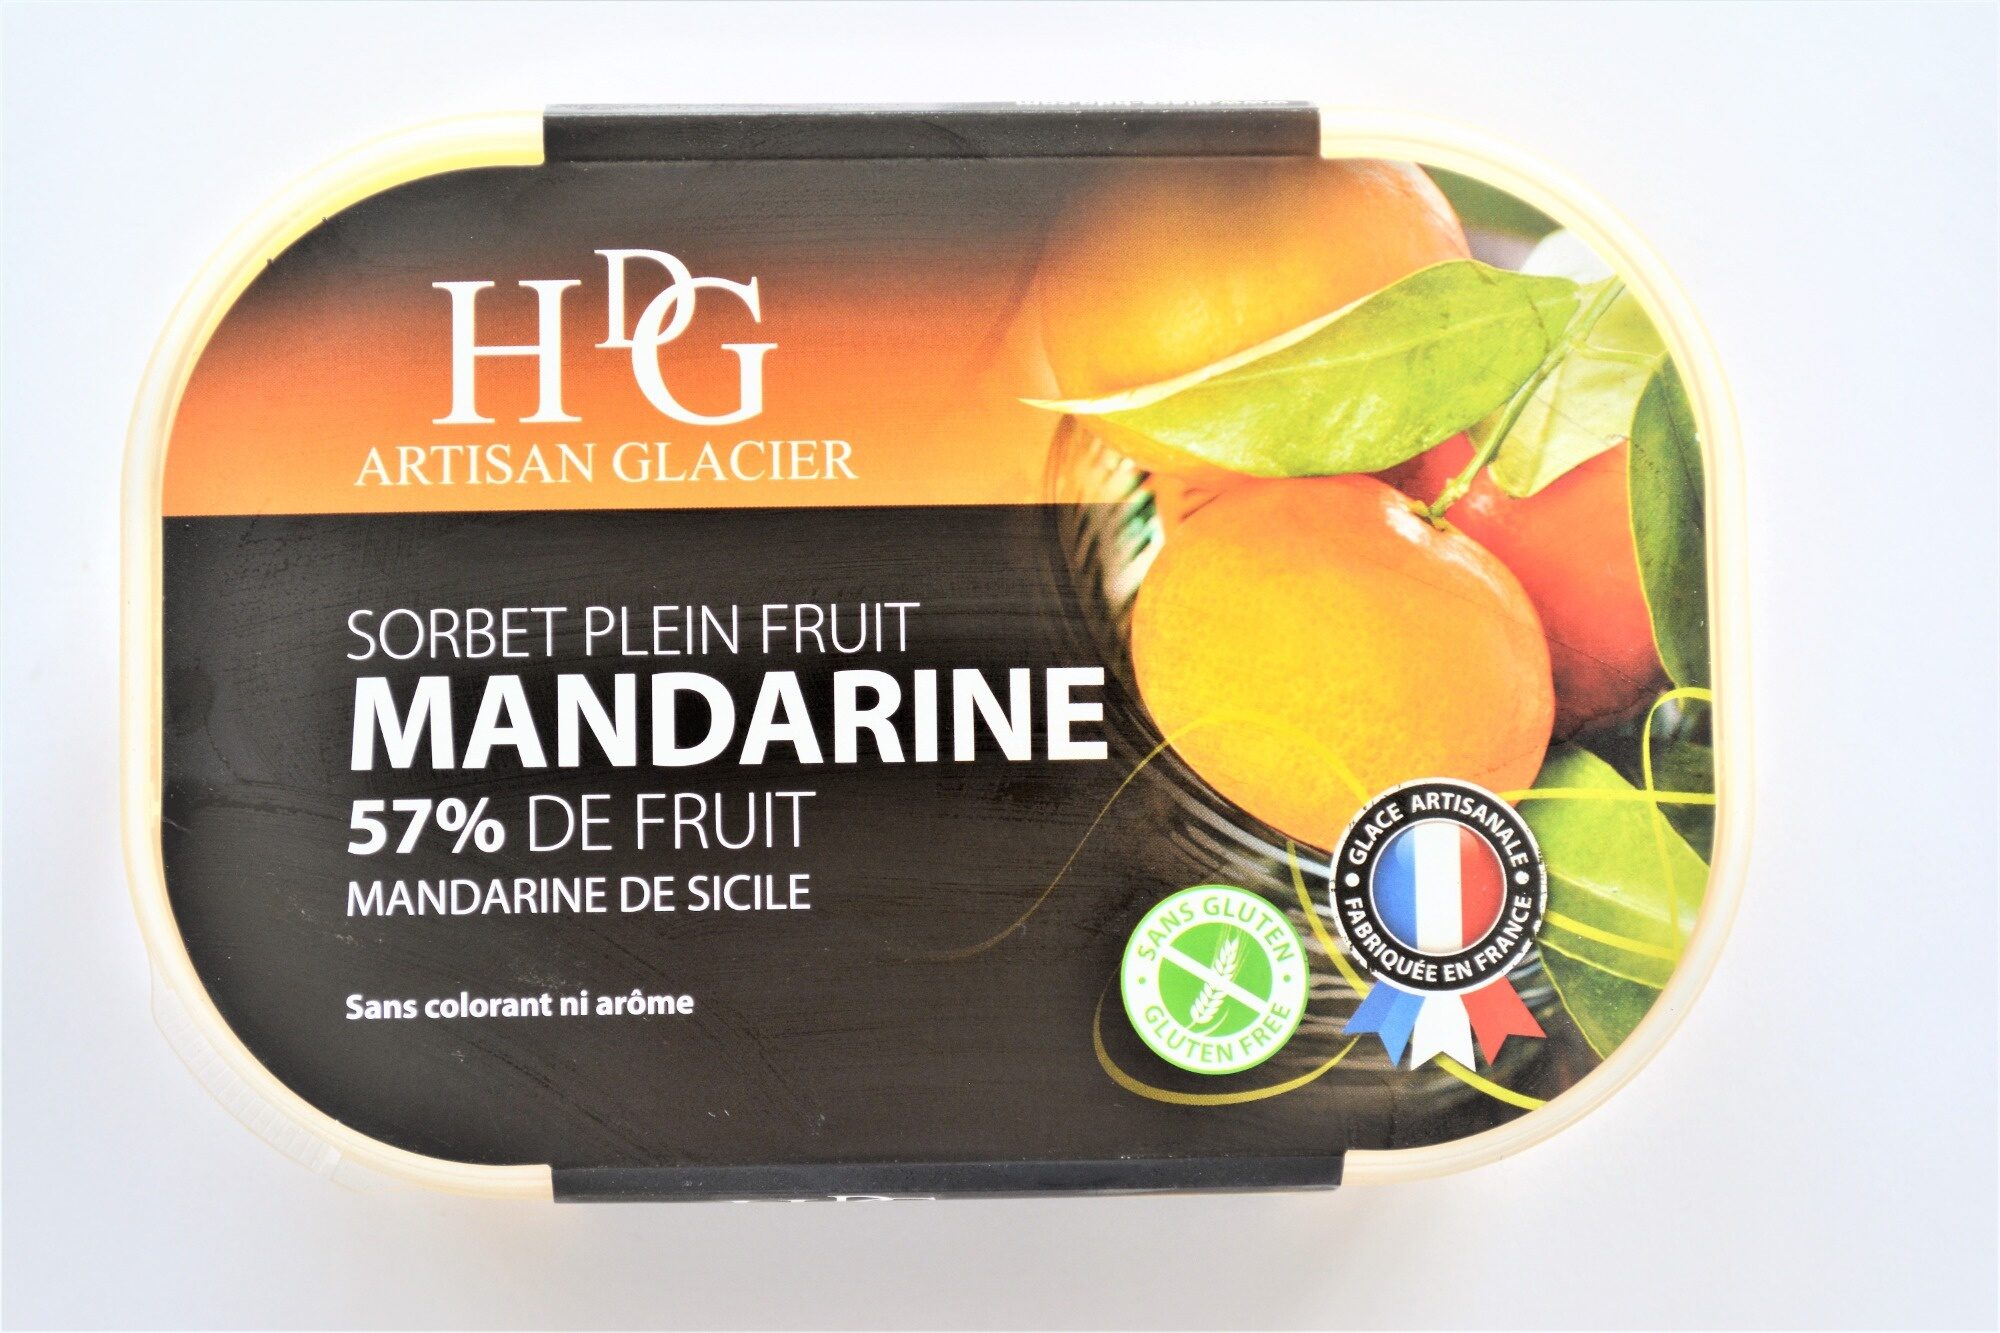 Sorbet plein fruit MANDARINE, 57% de fruit - Producto - fr